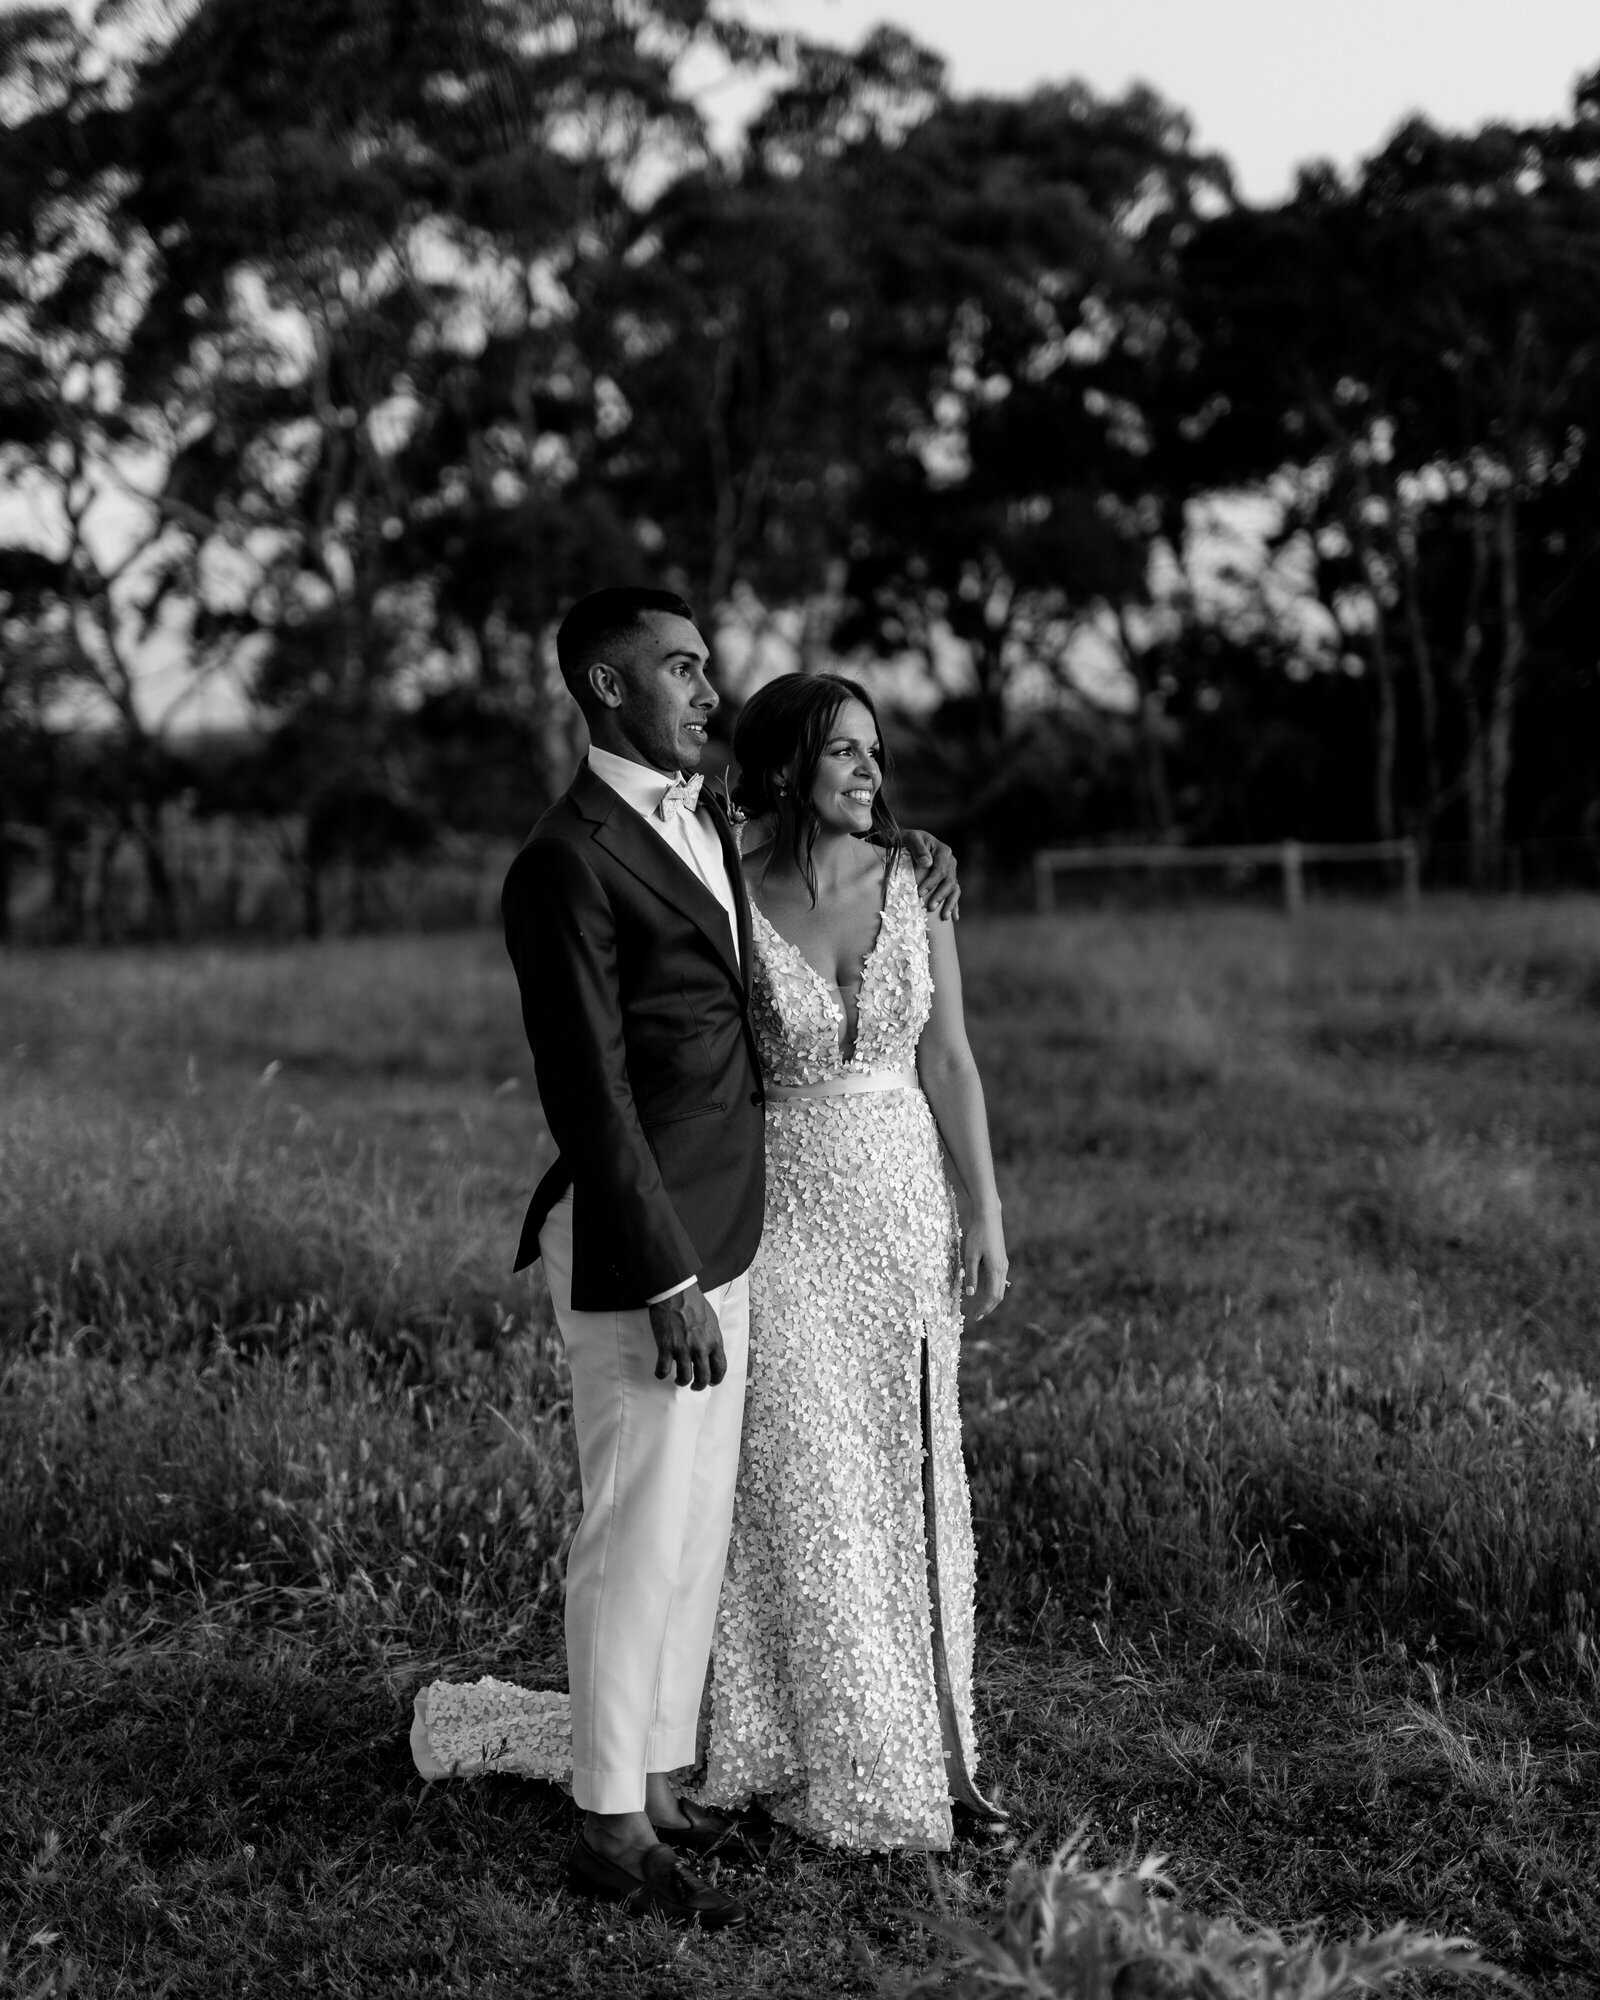 Chloe-Benny-Rexvil-Photography-Adelaide-Wedding-Photographer-469